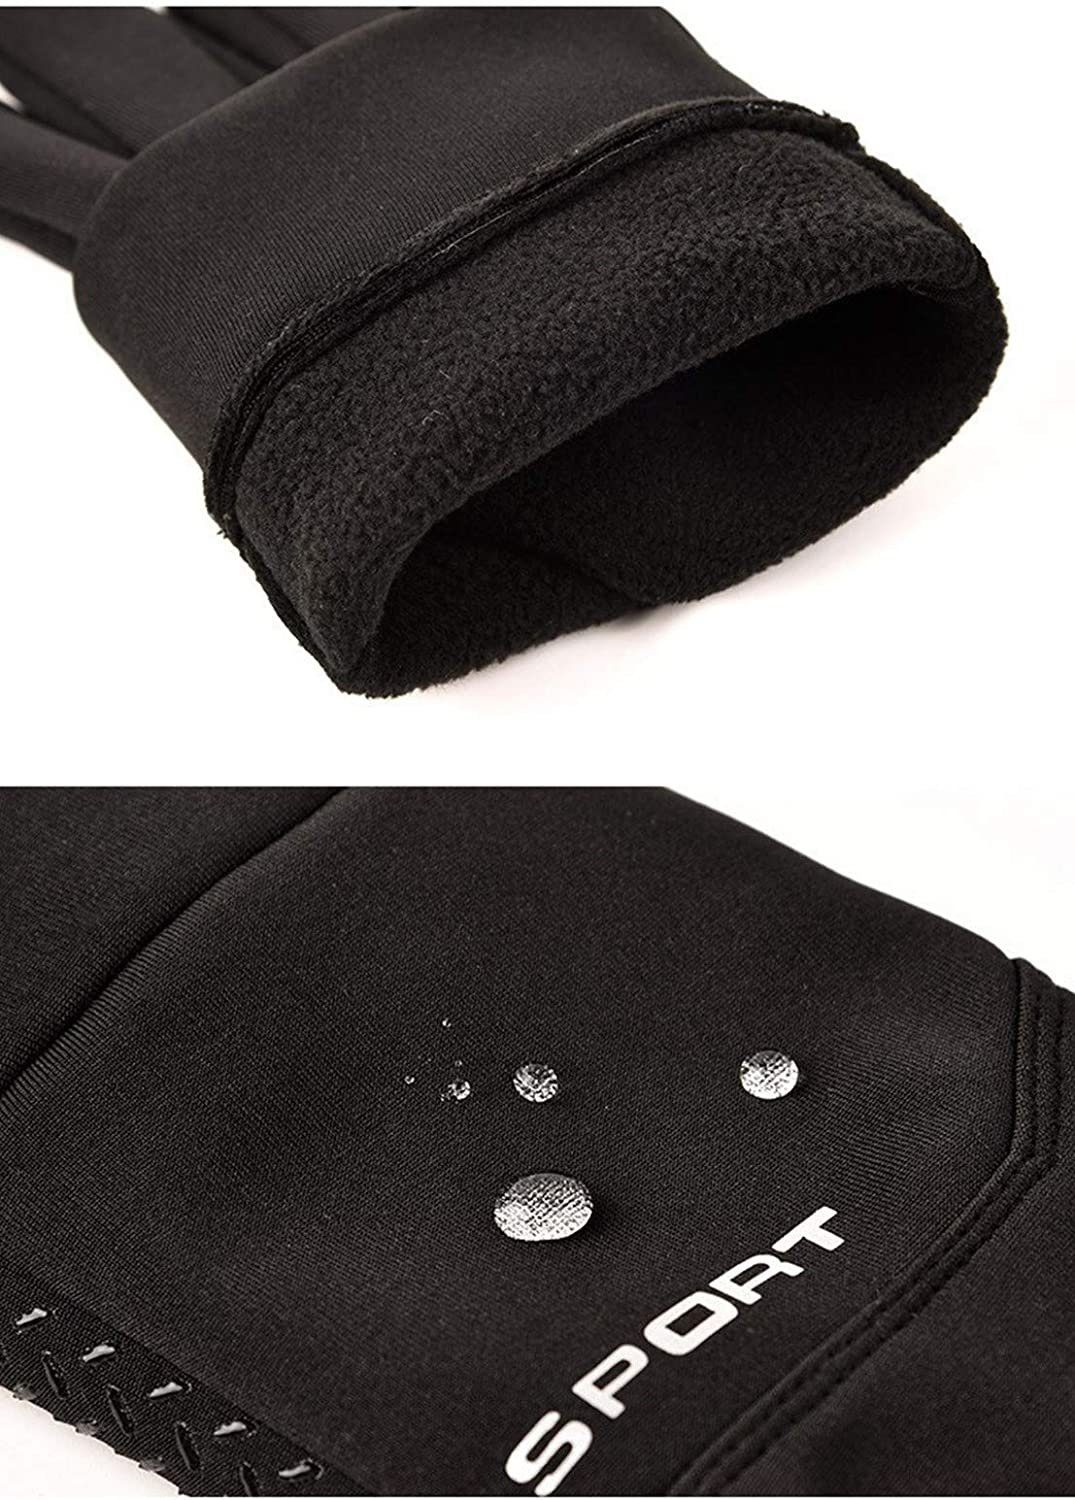 Alster Herz Alster Herz Design, atmungsaktiv Touchscreen Handschuhe sportlichem in Winter A0211 Lightweight, Fahrrad Fahrradhandschuhe Schwarz